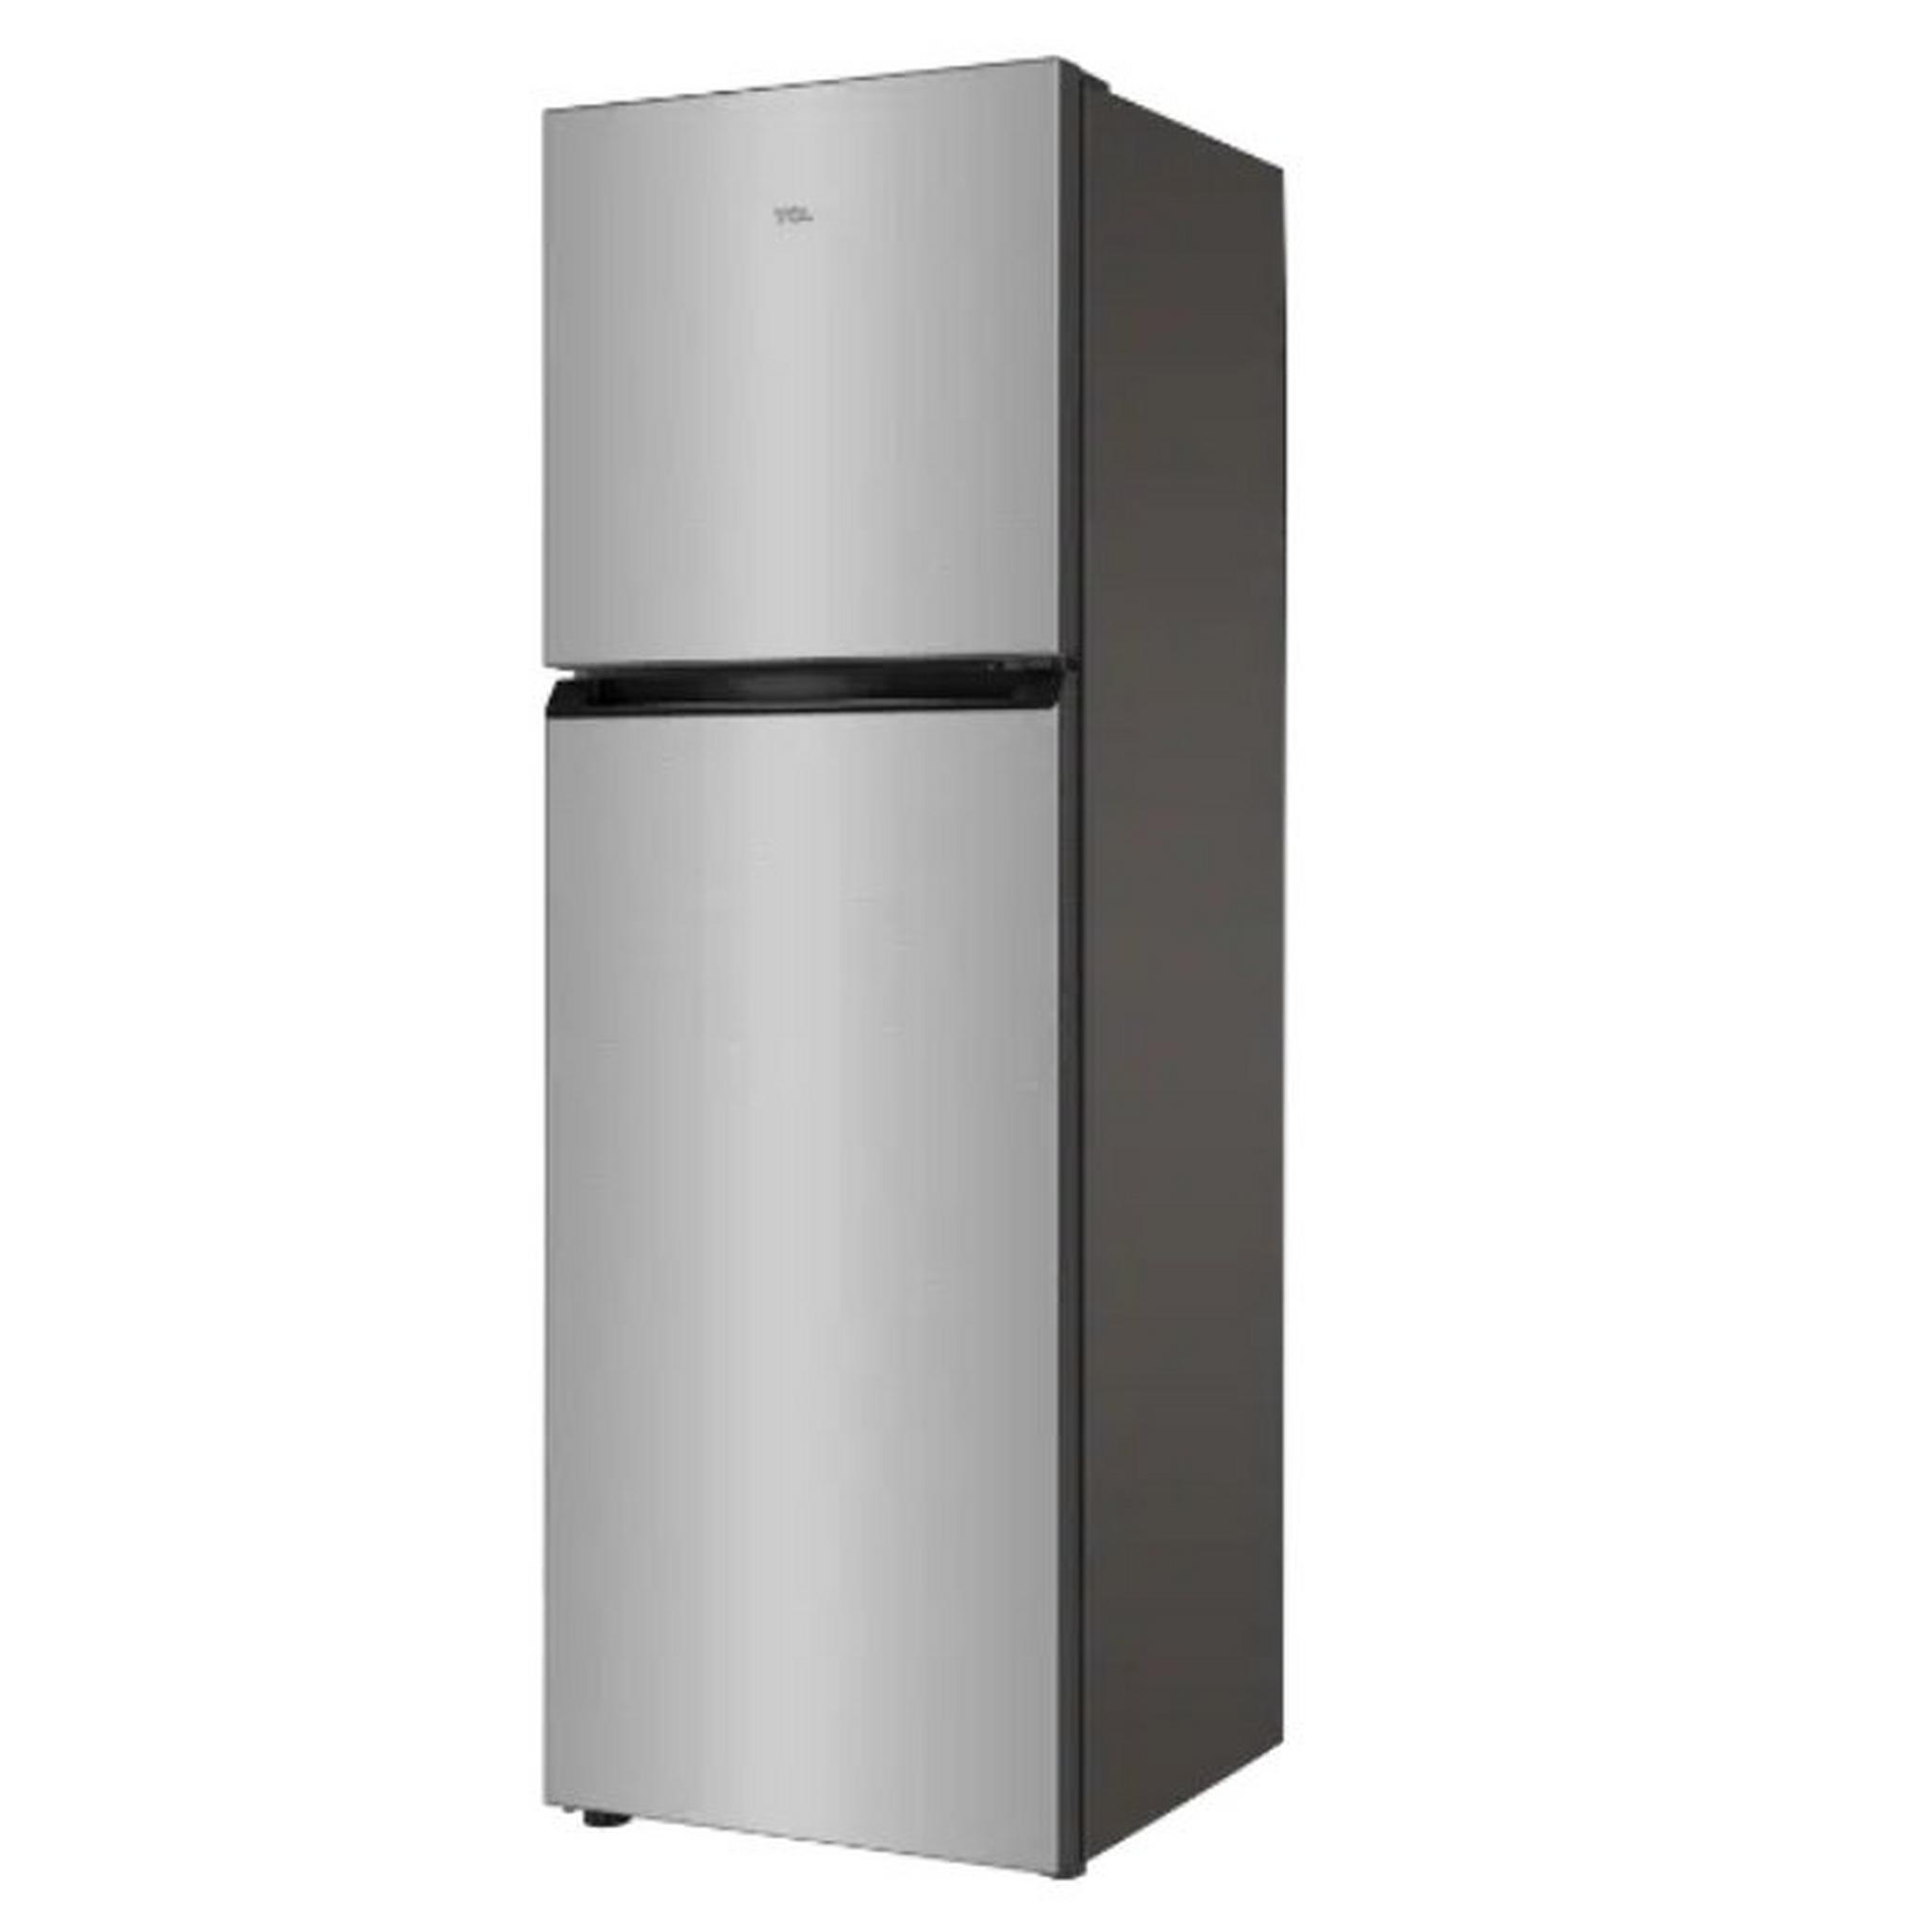 TCL Top Freezer Refrigerator, 13 CFT, 370 Liters, P370TMN – Inox